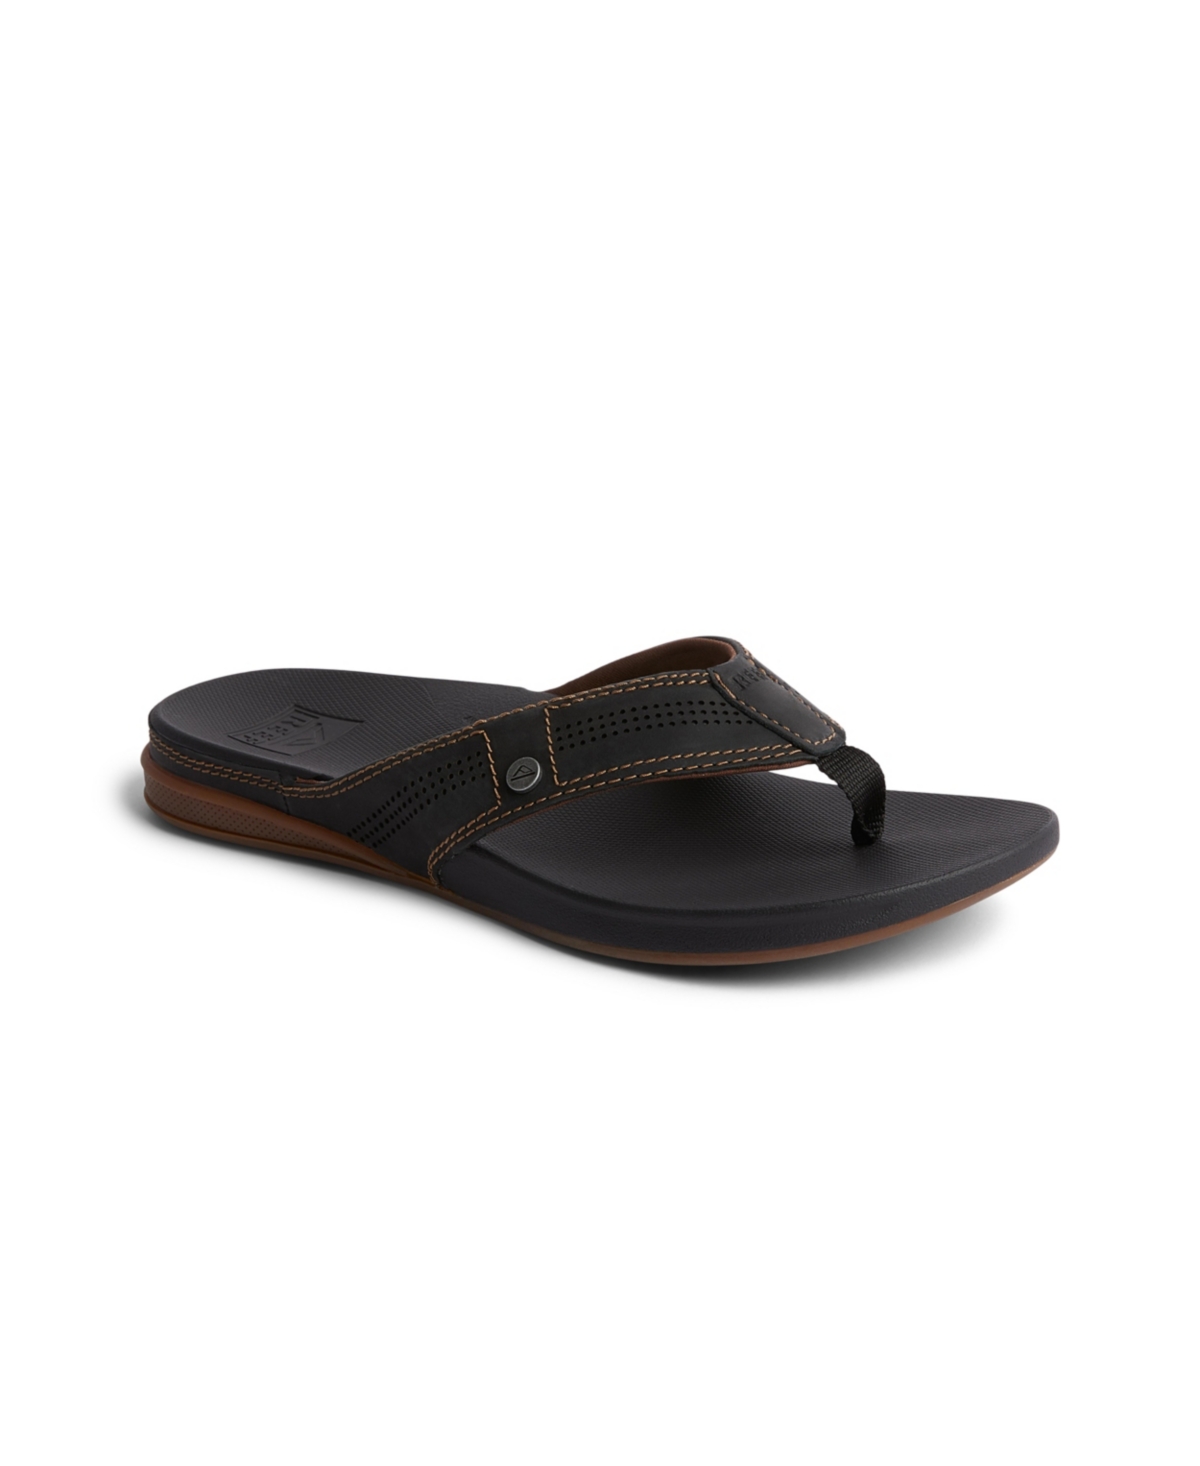 Men's Cushion Lux Slip-On Sandals - Black, Brown